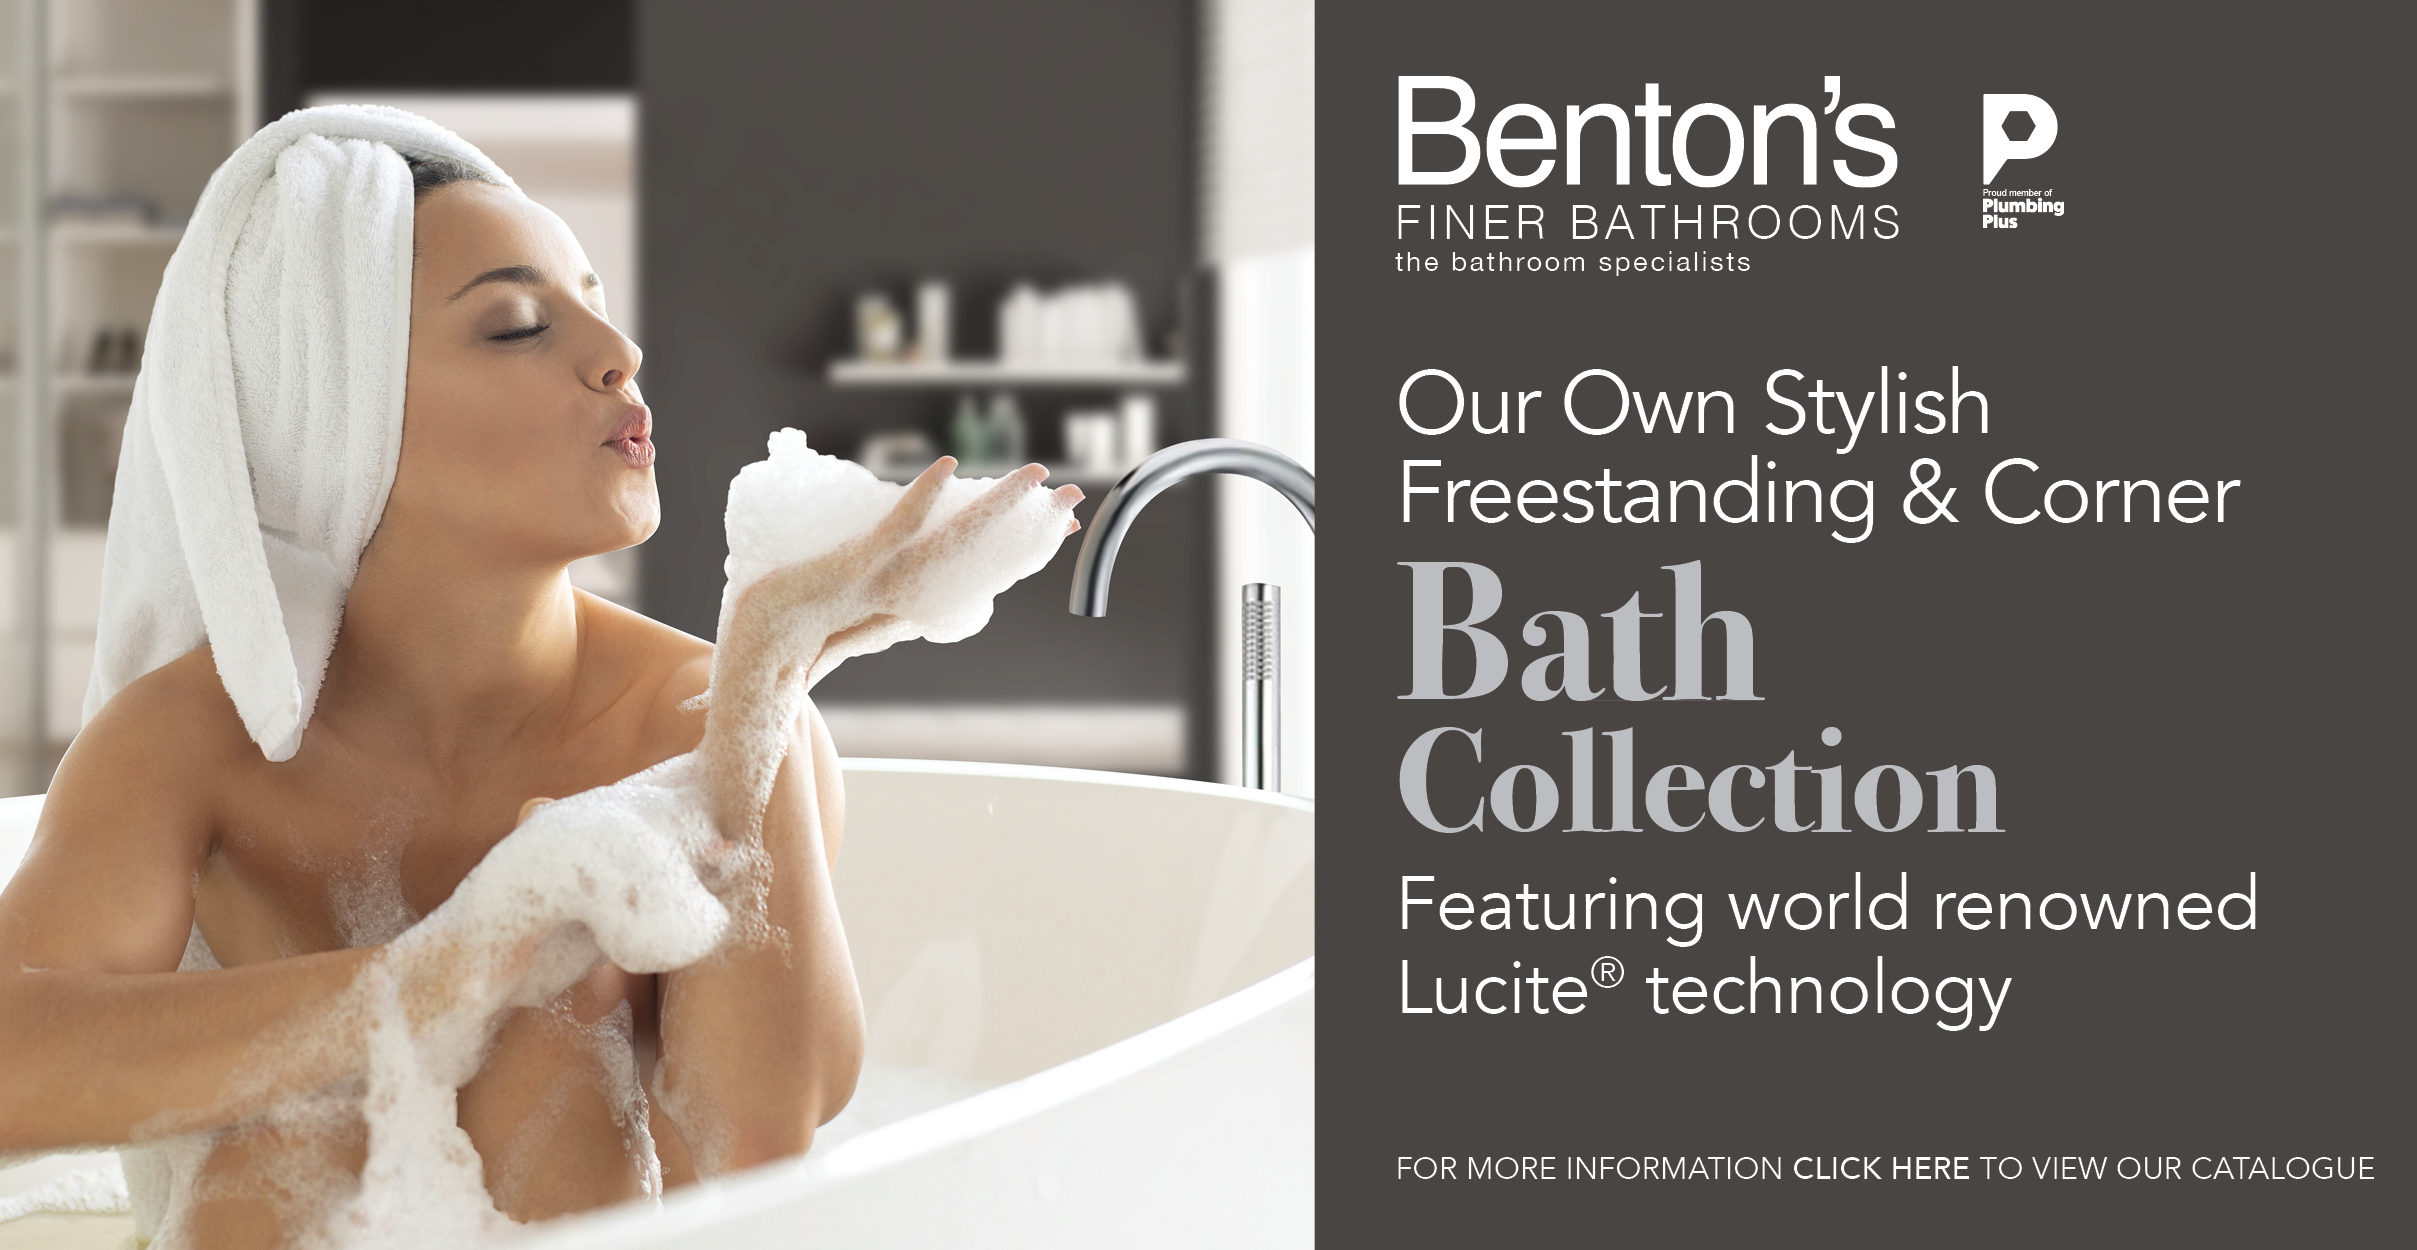 Benton's Finer Bathrooms Freestanding Bath Collection